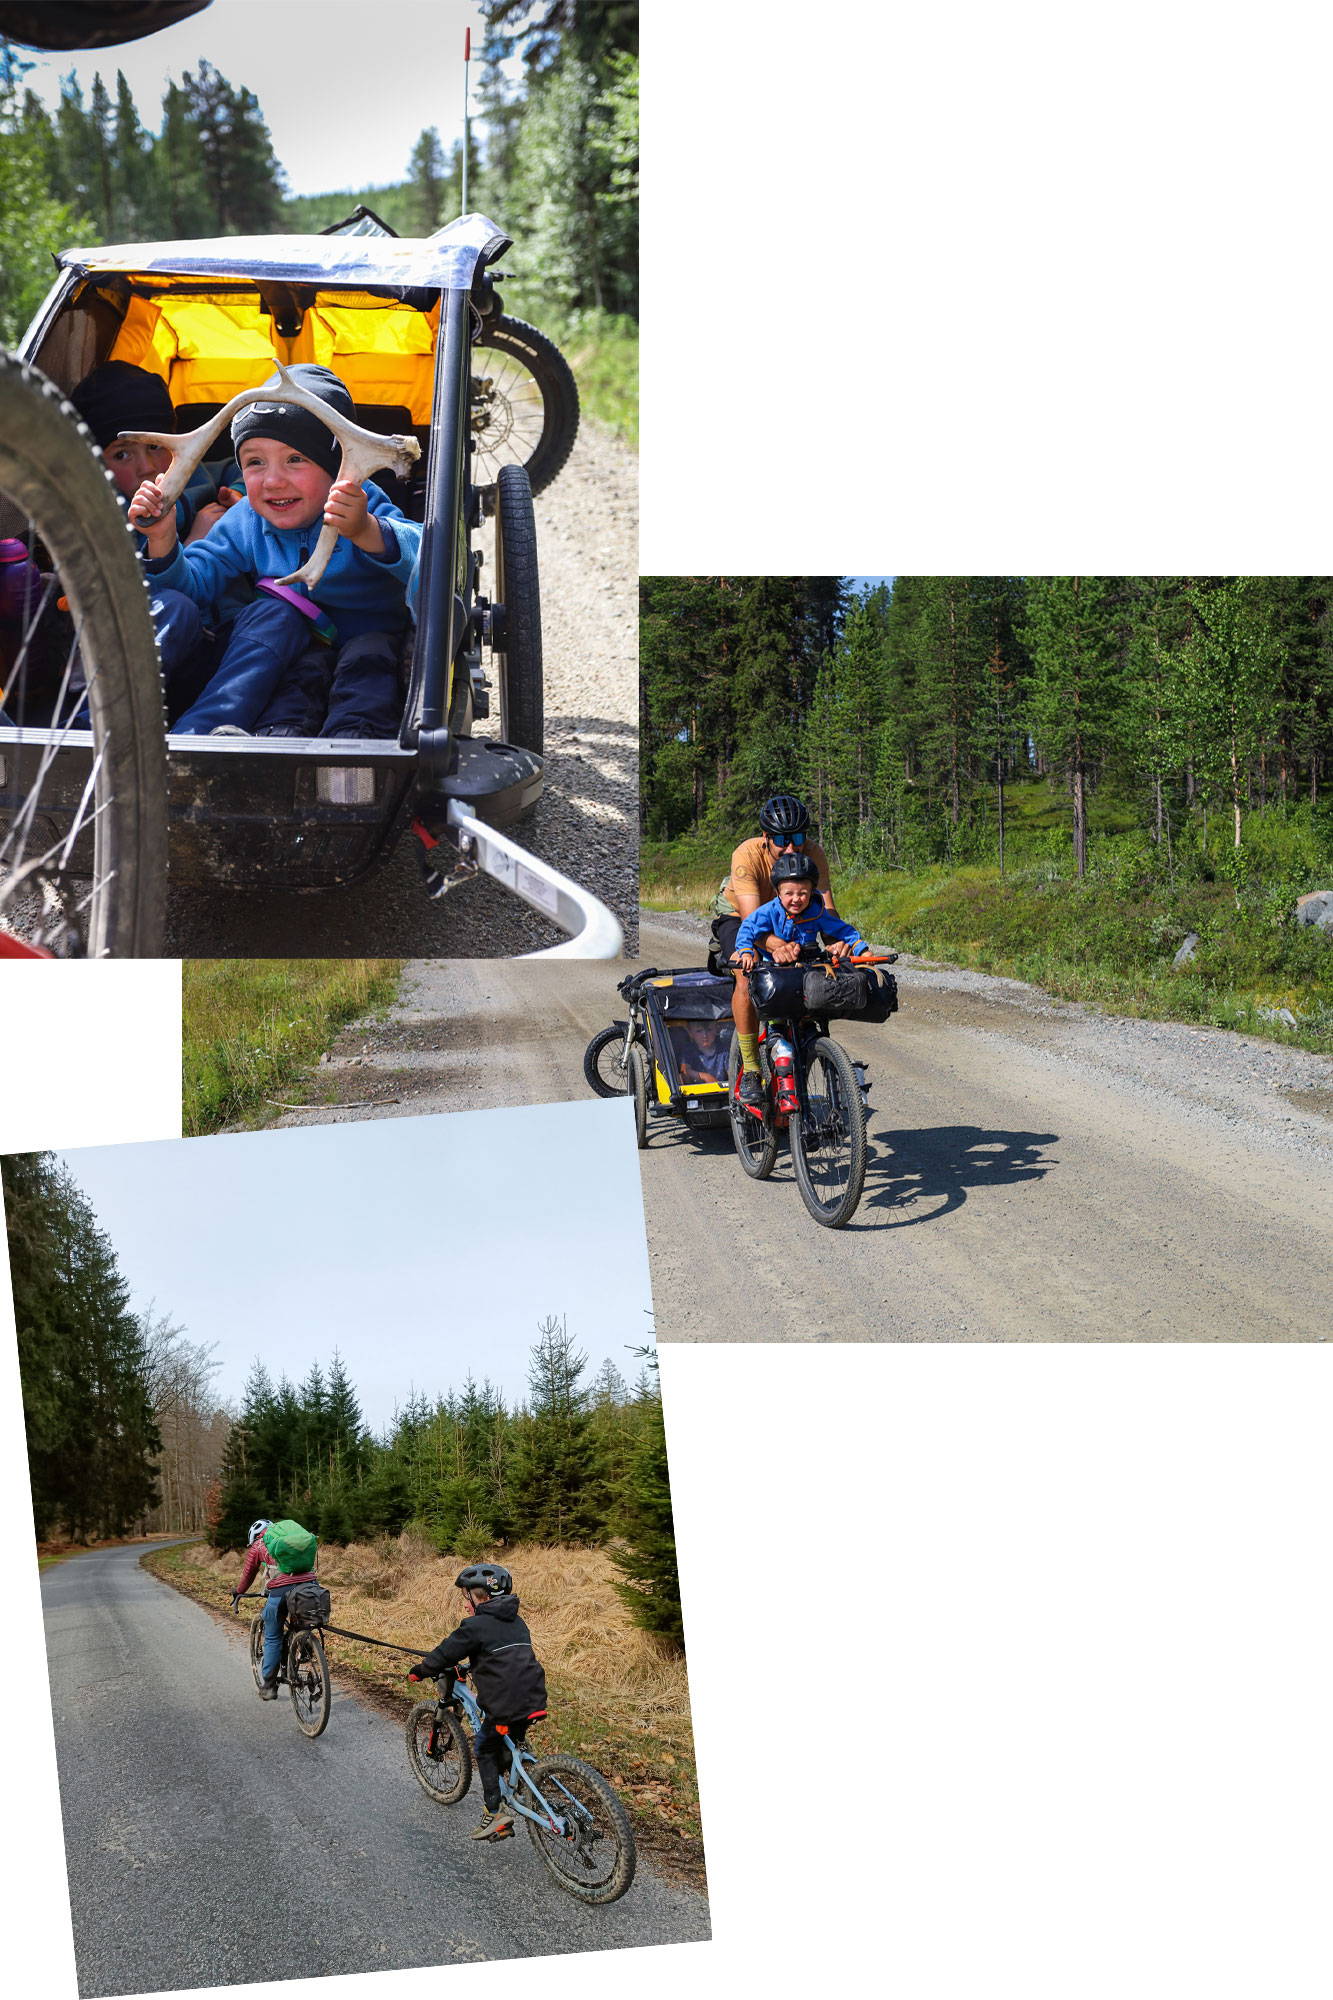 Collage of riding photos